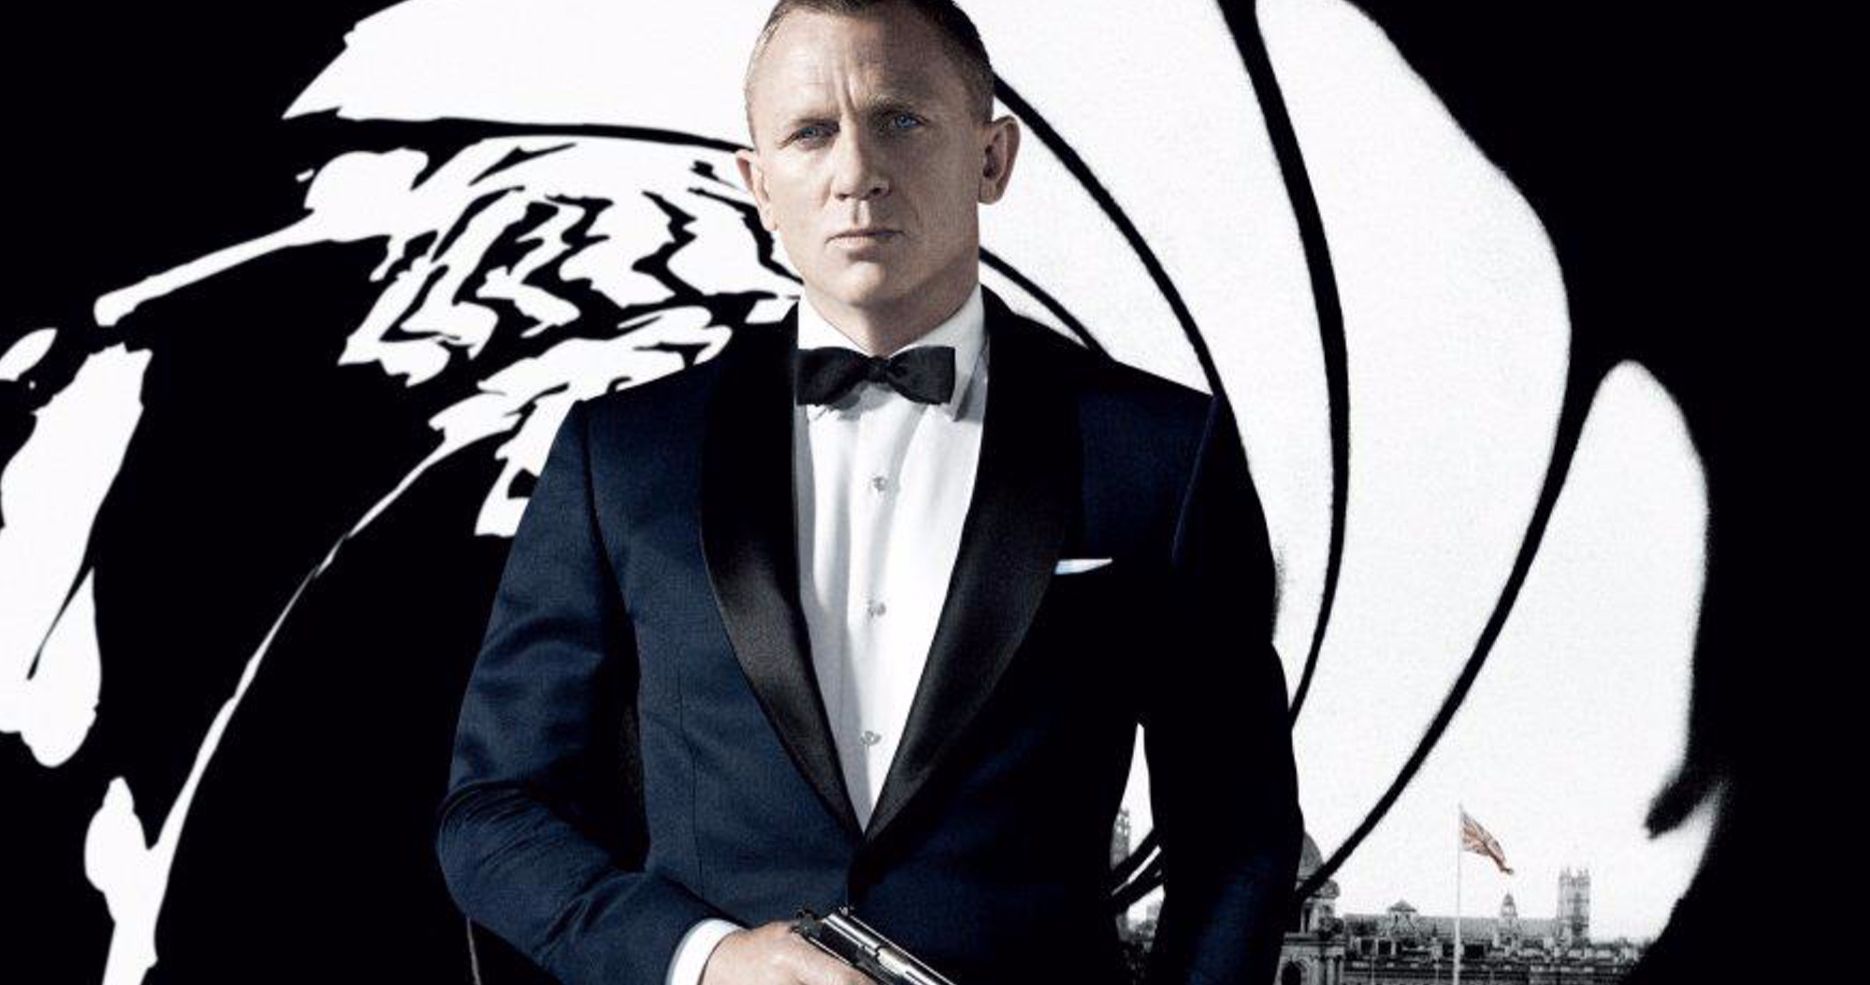 Danny Boyle Disowns Blockbuster Franchises After James Bond 25 Fiasco